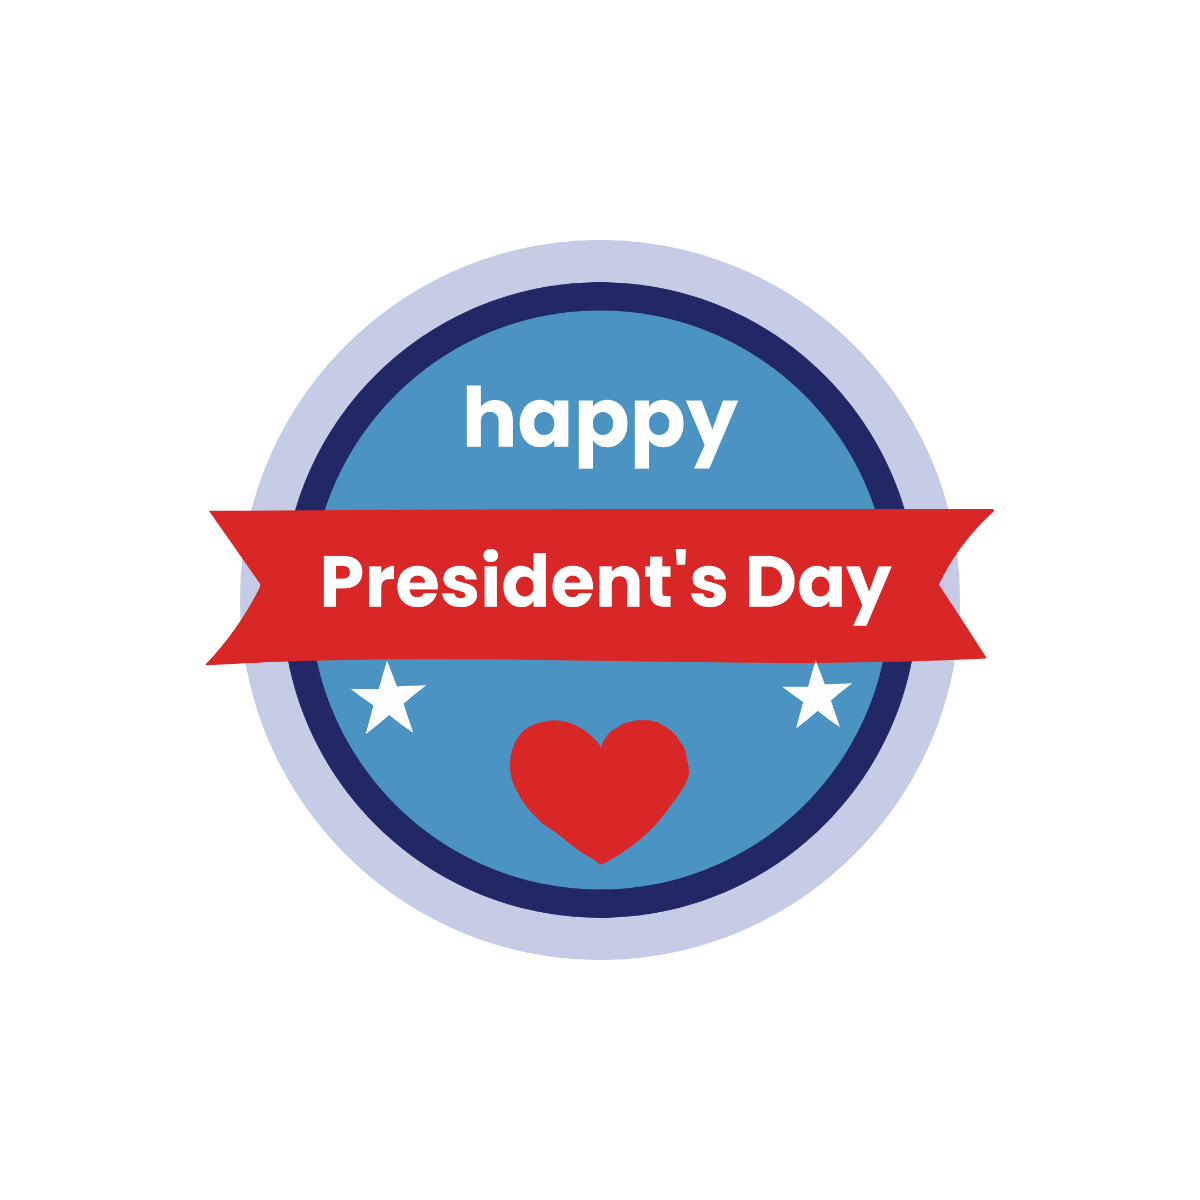 President's Day Sticker Template